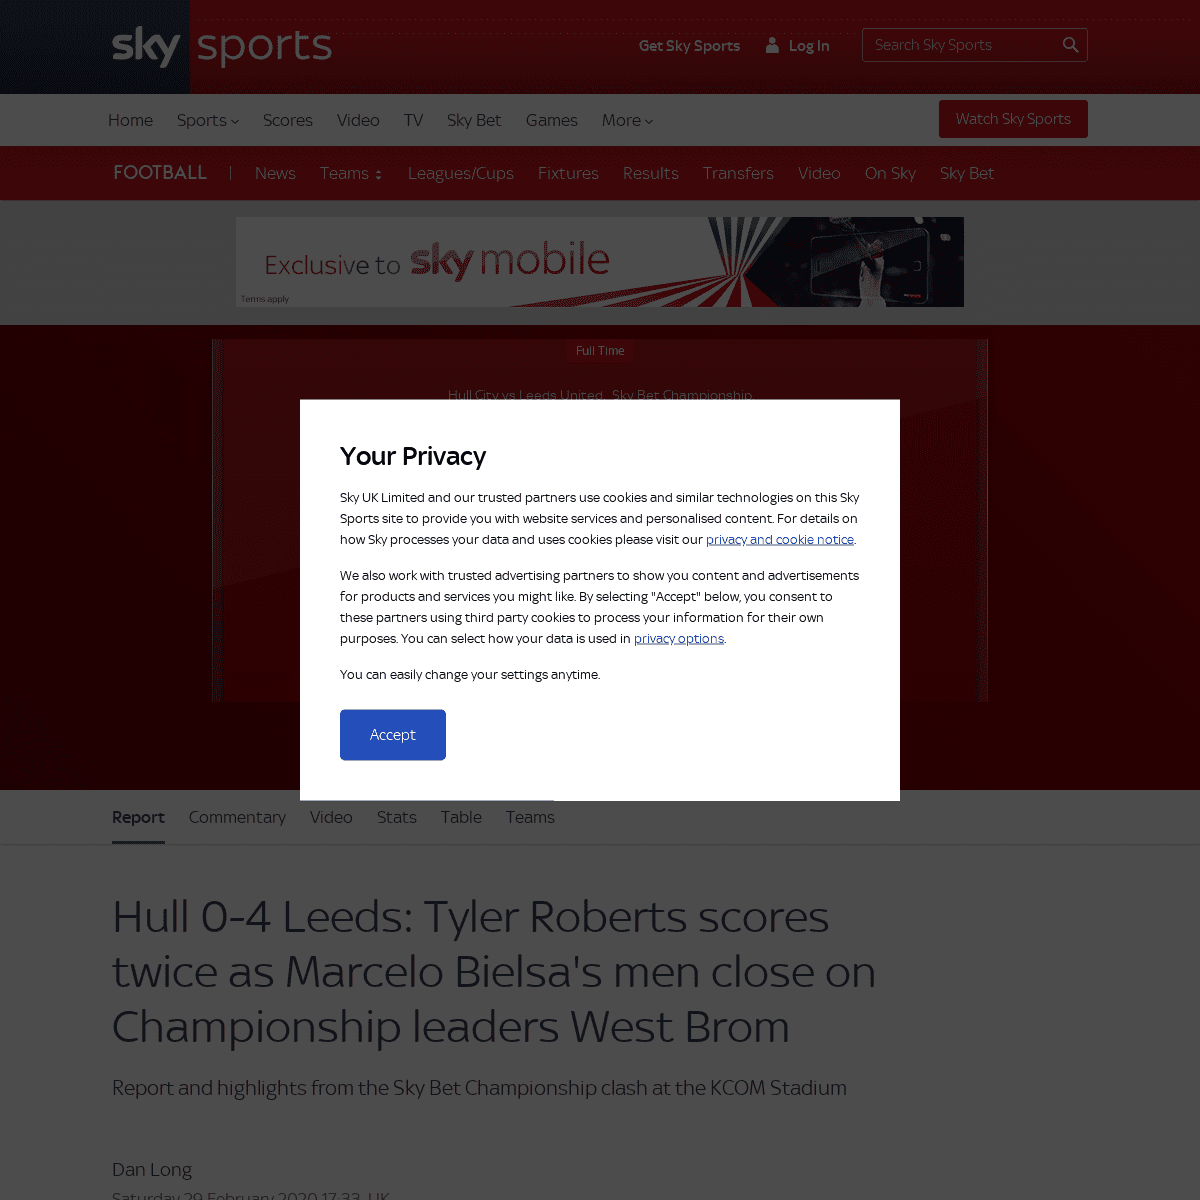 A complete backup of www.skysports.com/football/hull-city-vs-leeds/report/409772